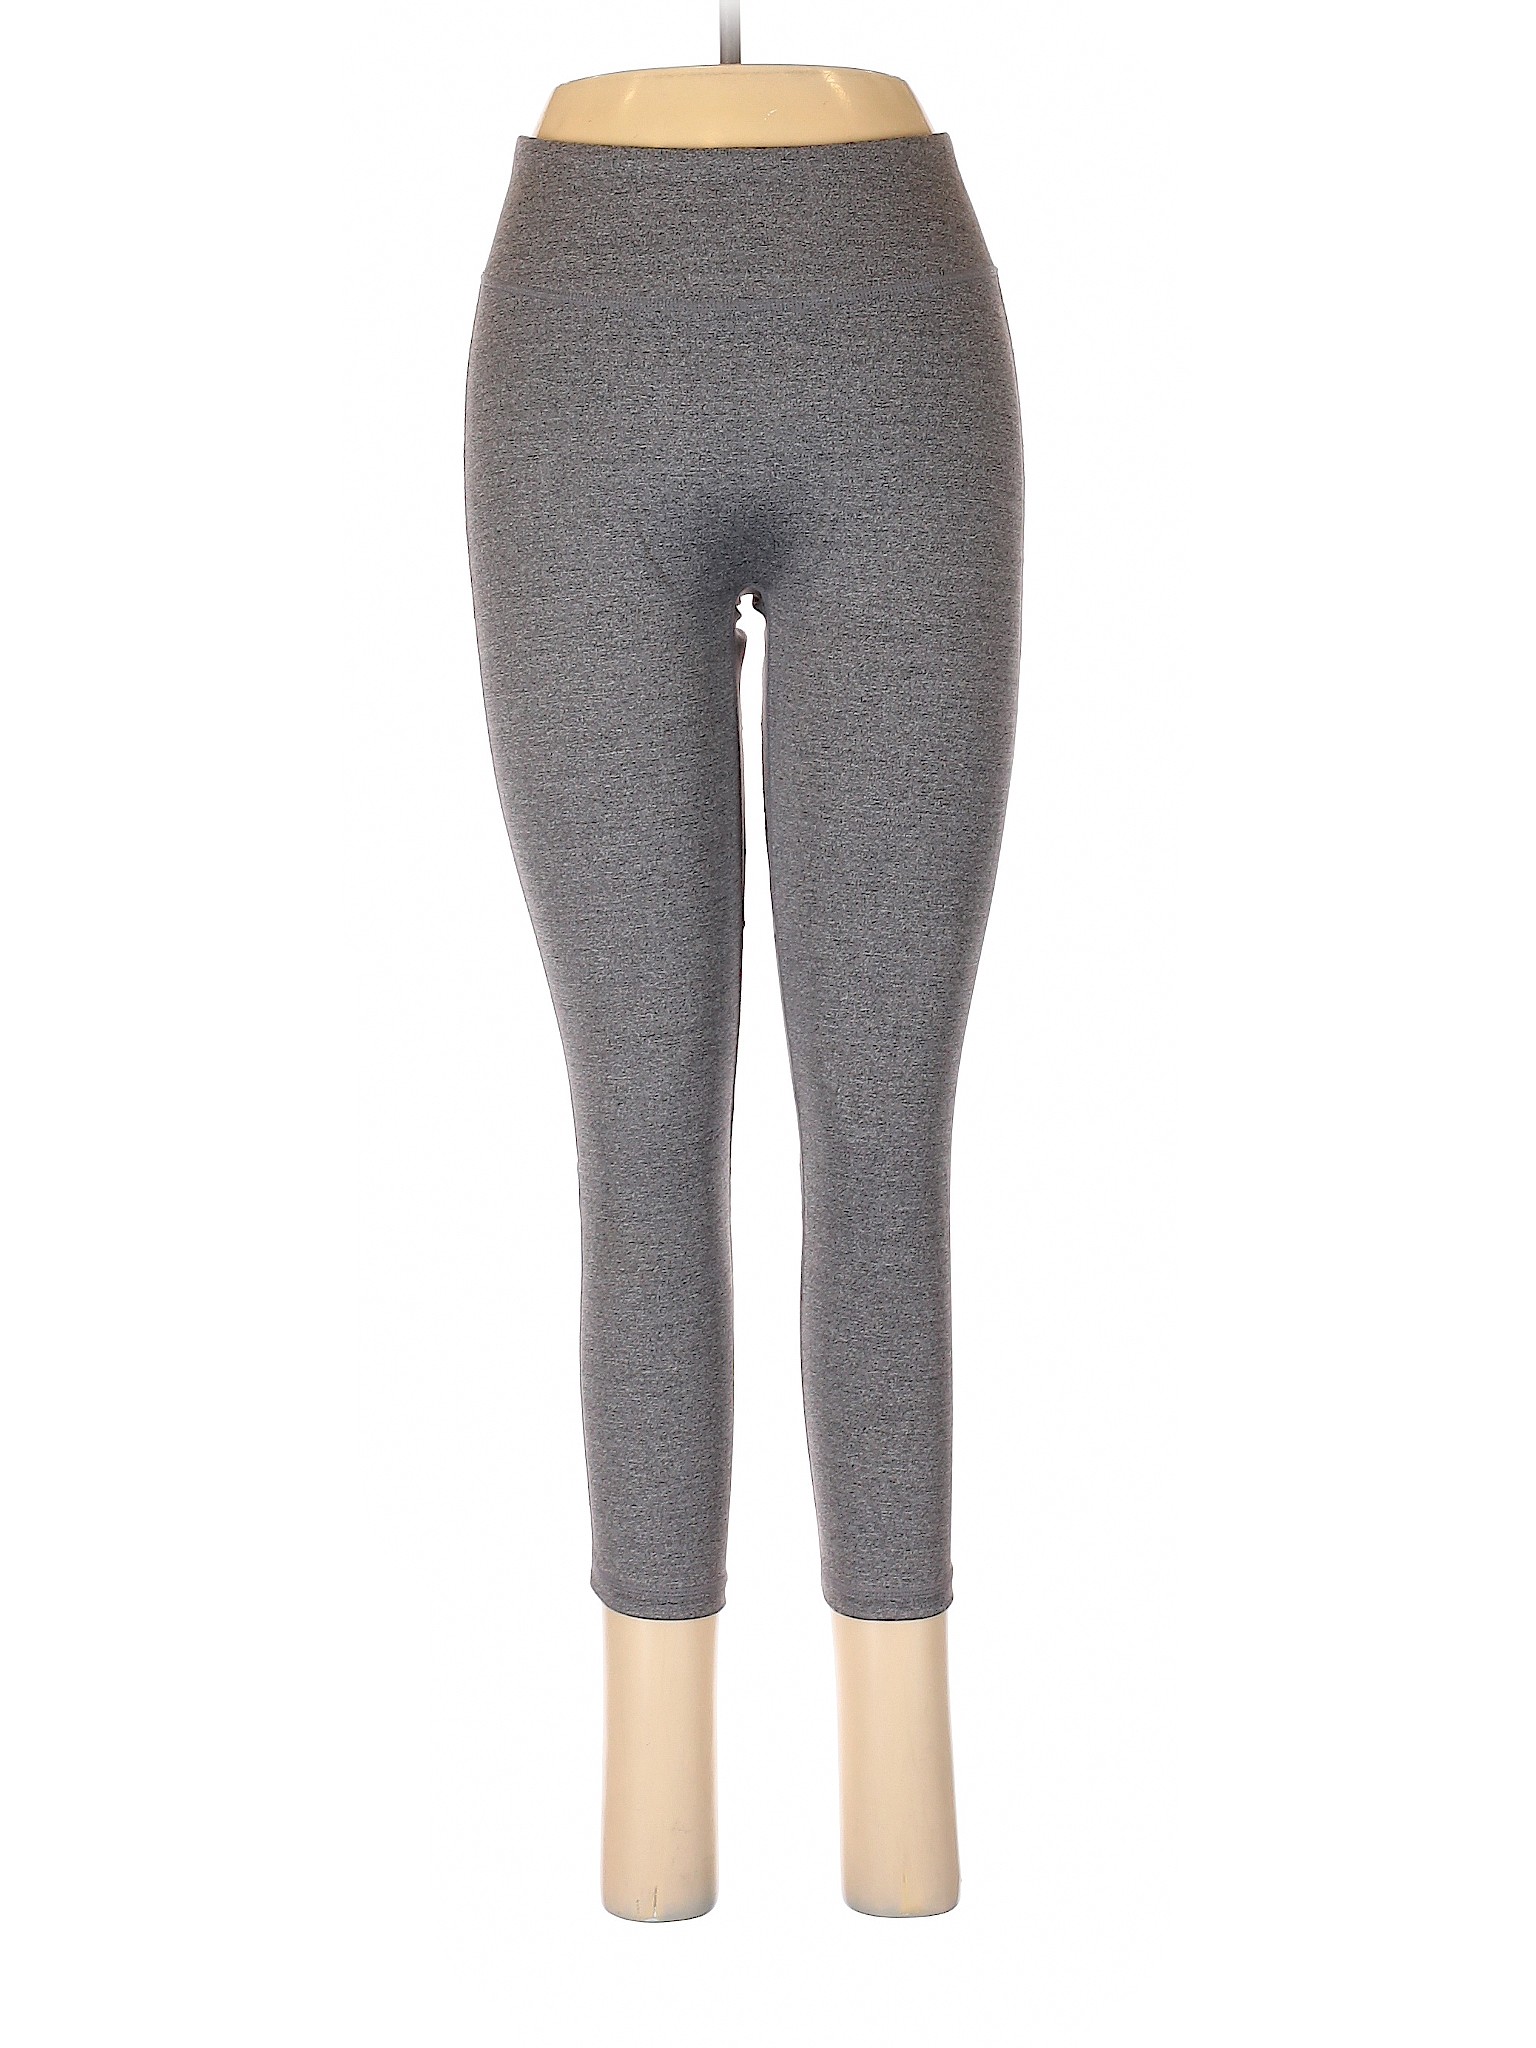 Uniqlo Women Gray Active Pants M | eBay